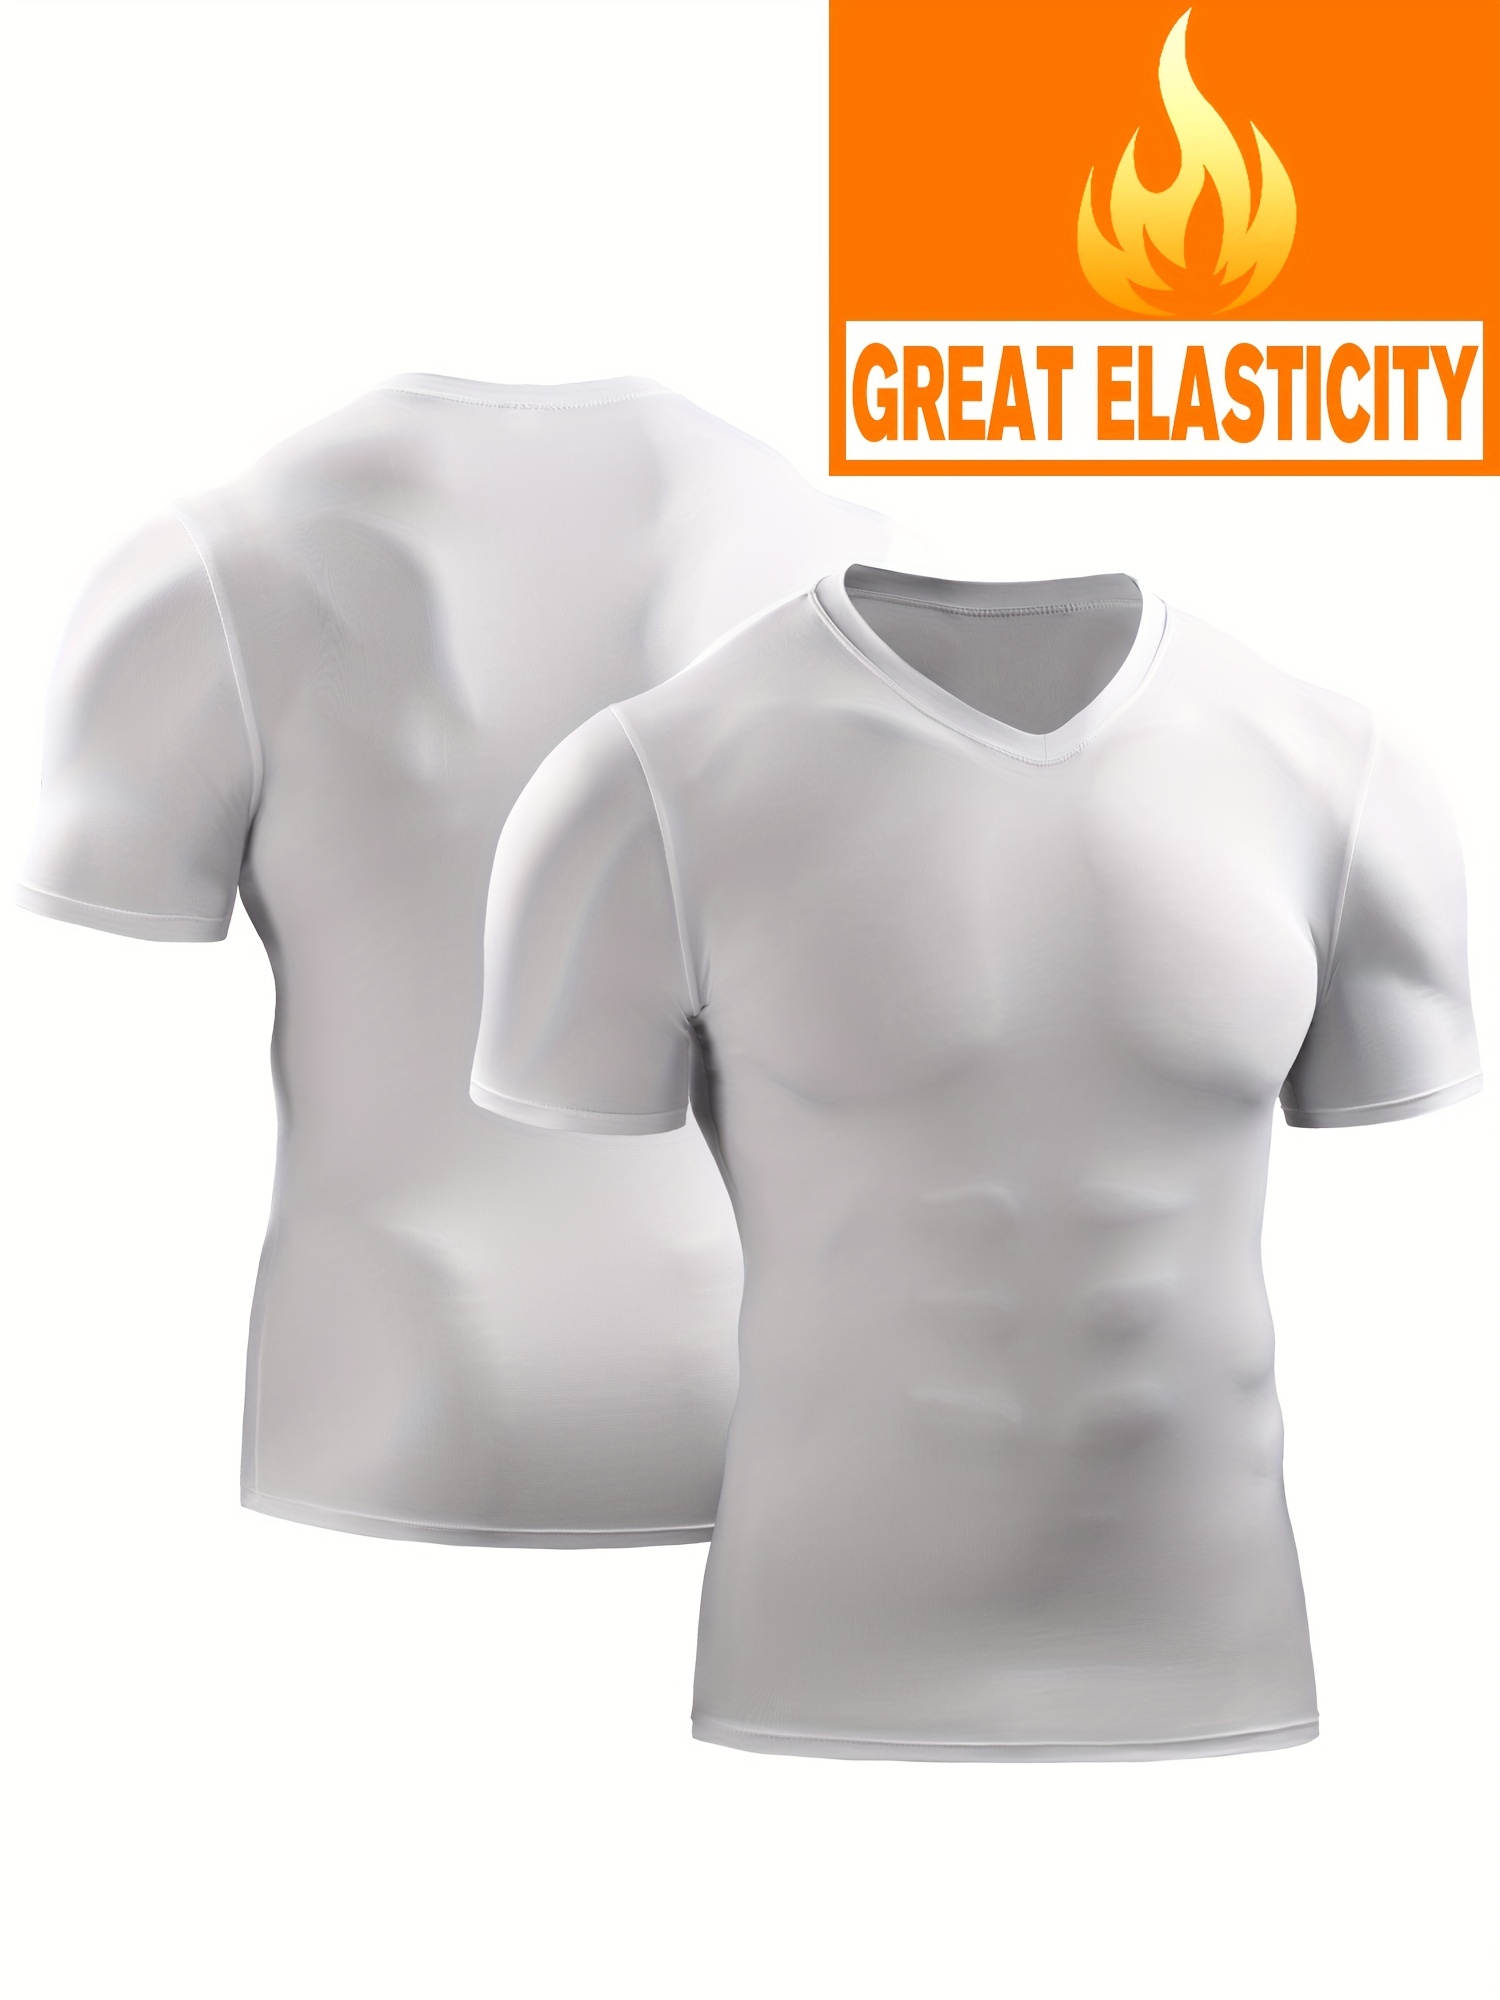 Men's Running Tshirts Quick Dry Soccer Jersey Fitness Tight